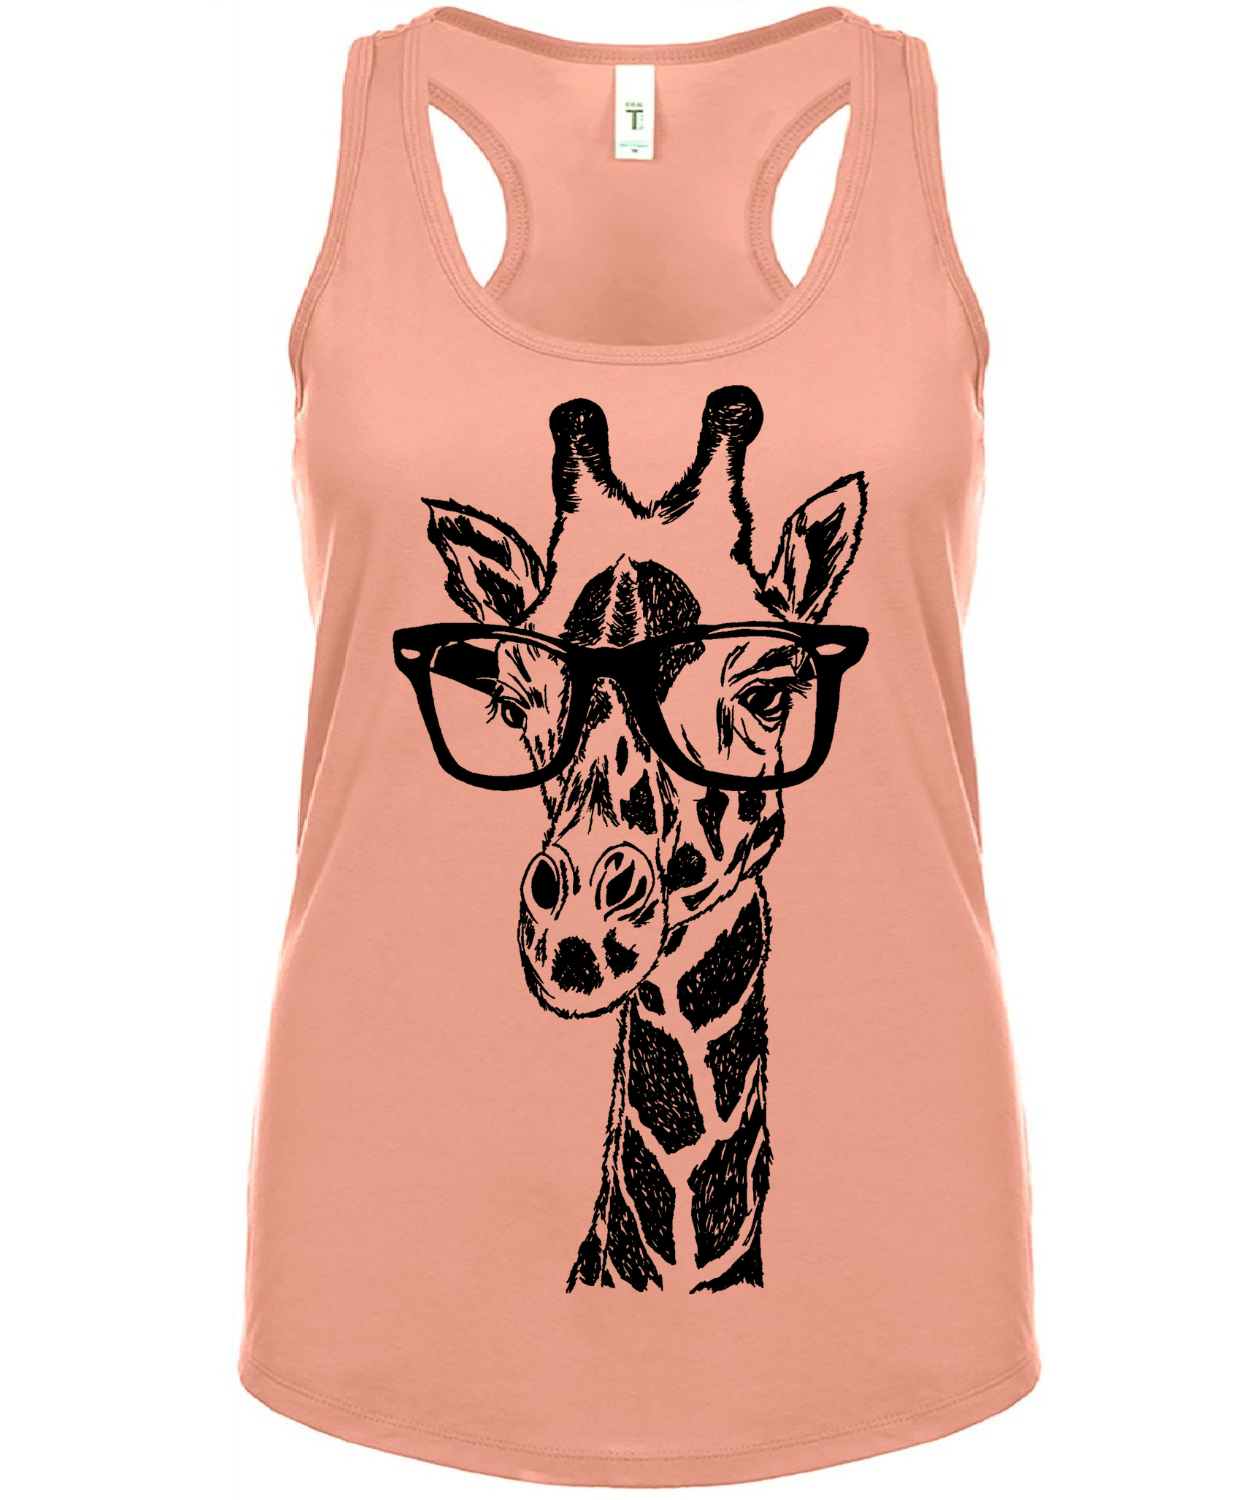 Giraffe Wearing Glasses Ladies Tank Top